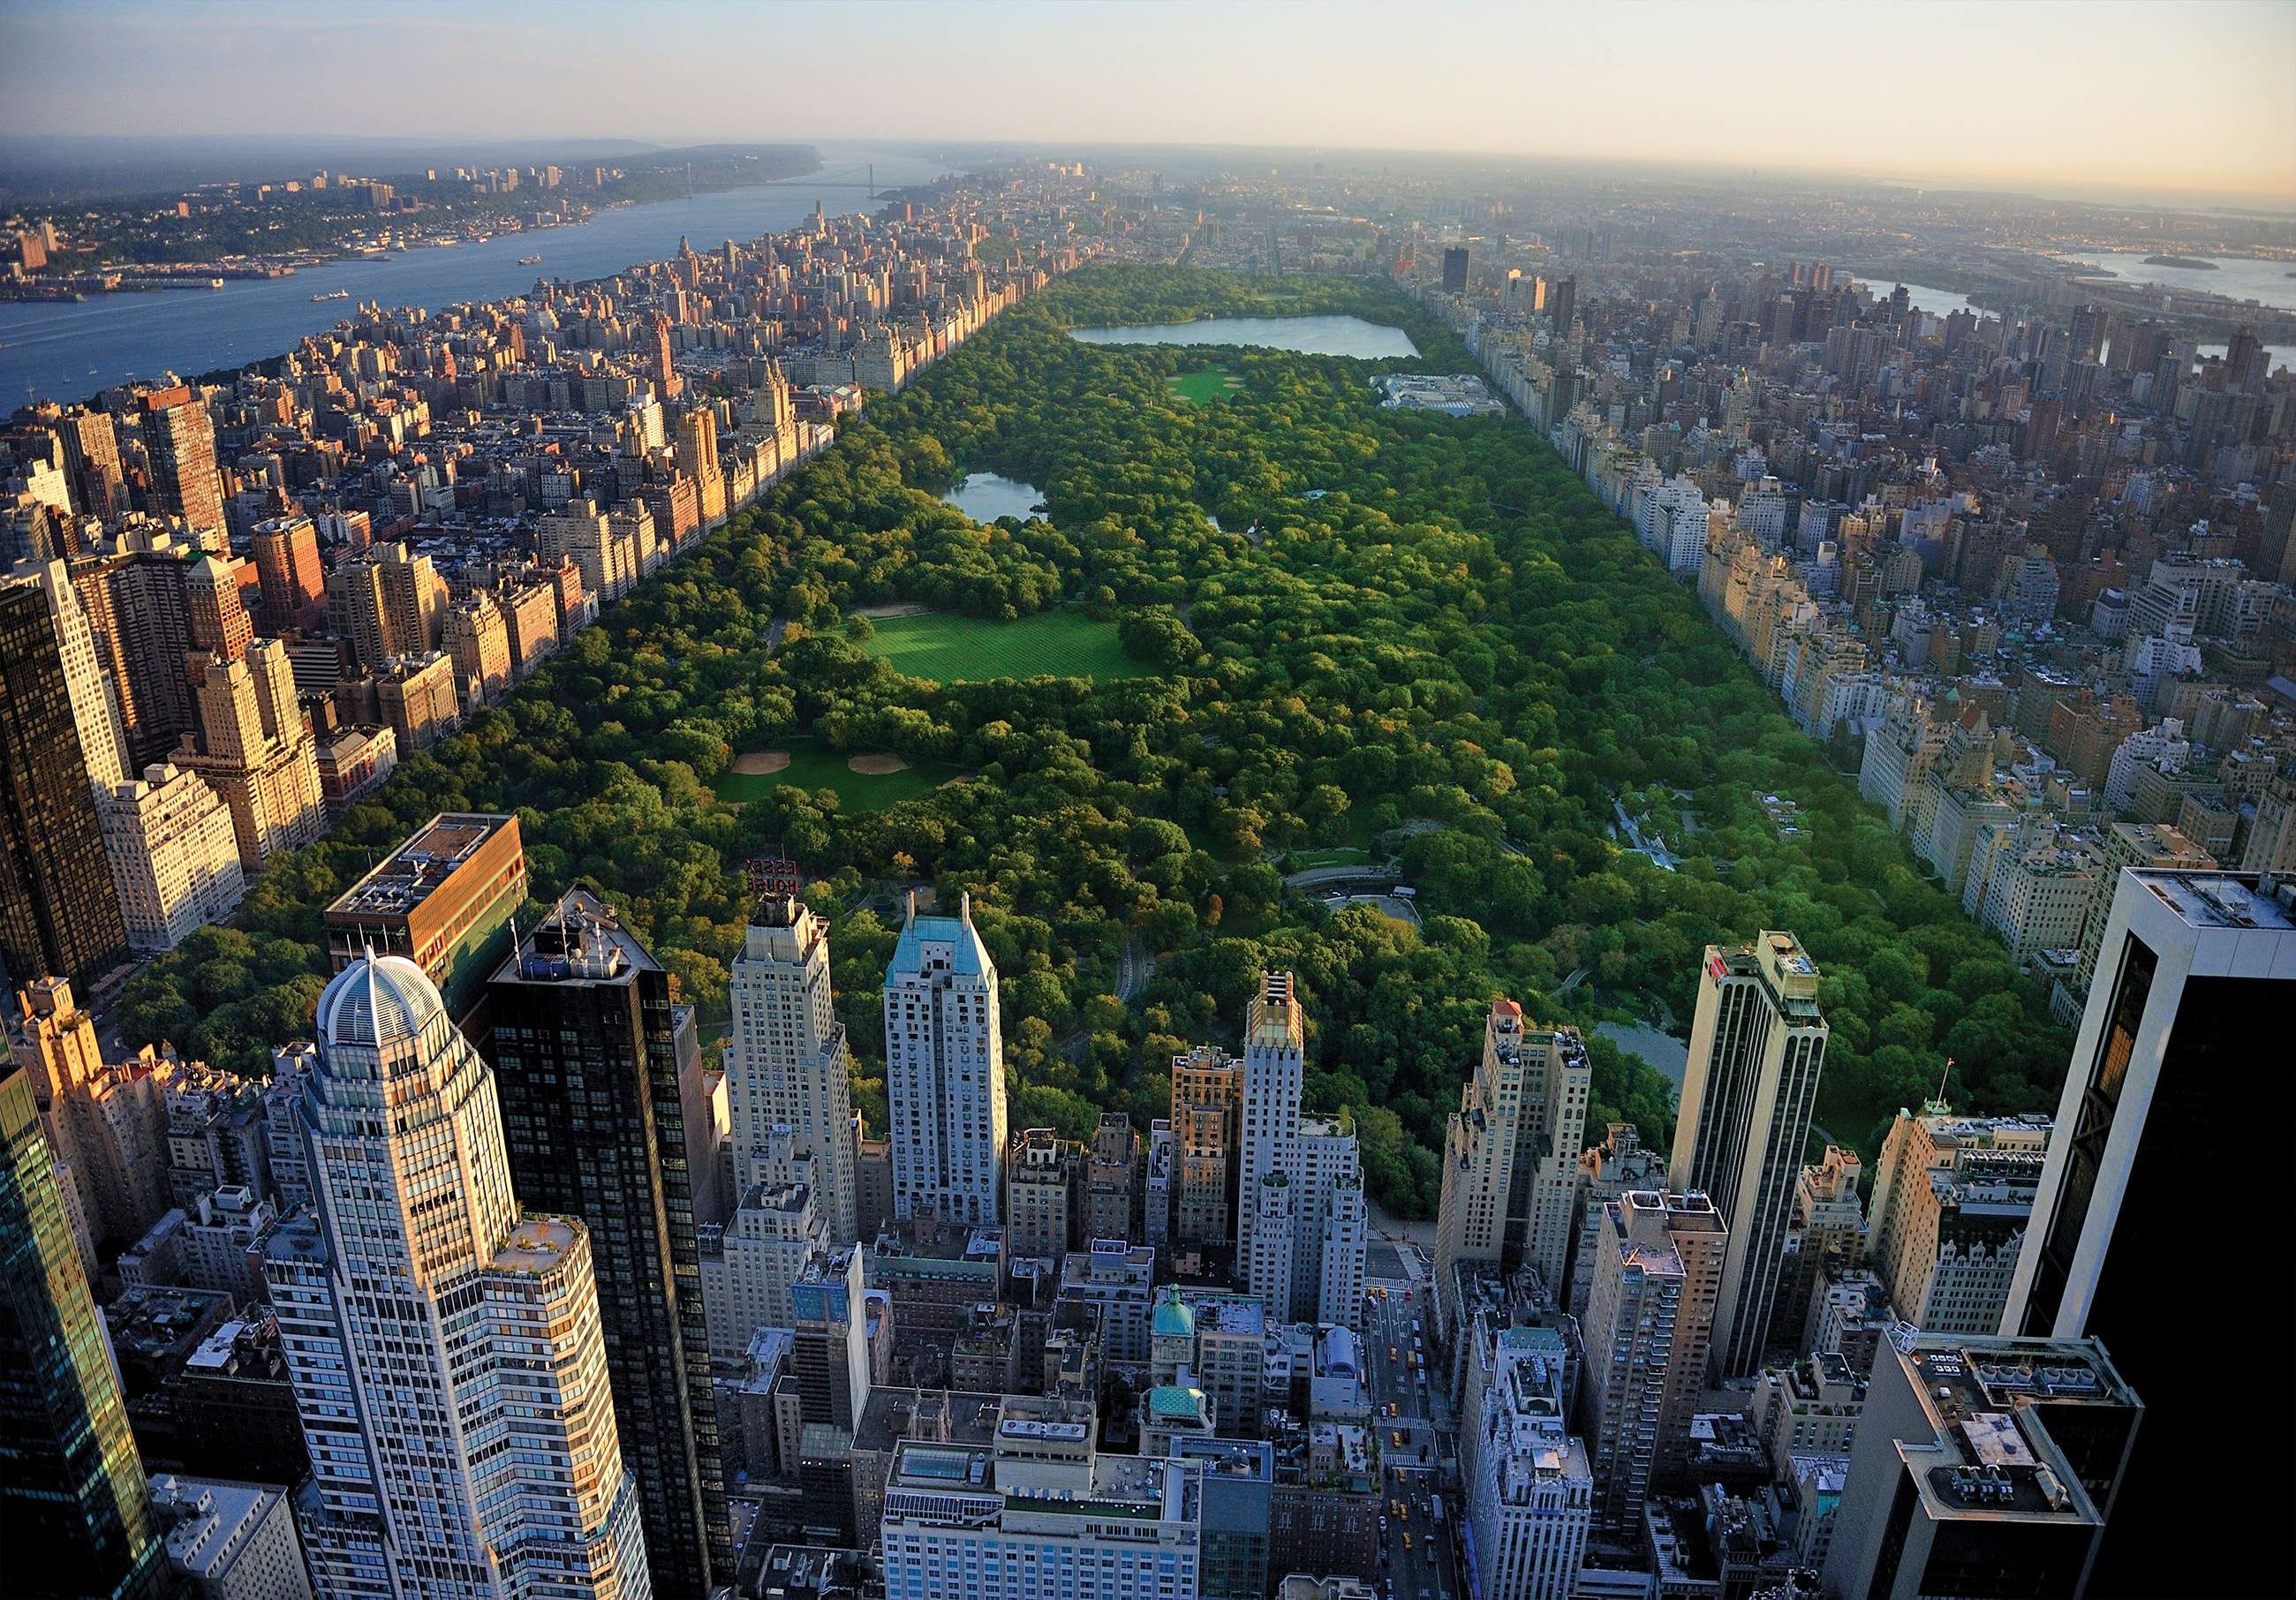 Vlies fotótapéta: New York Central Park - 254x184 cm